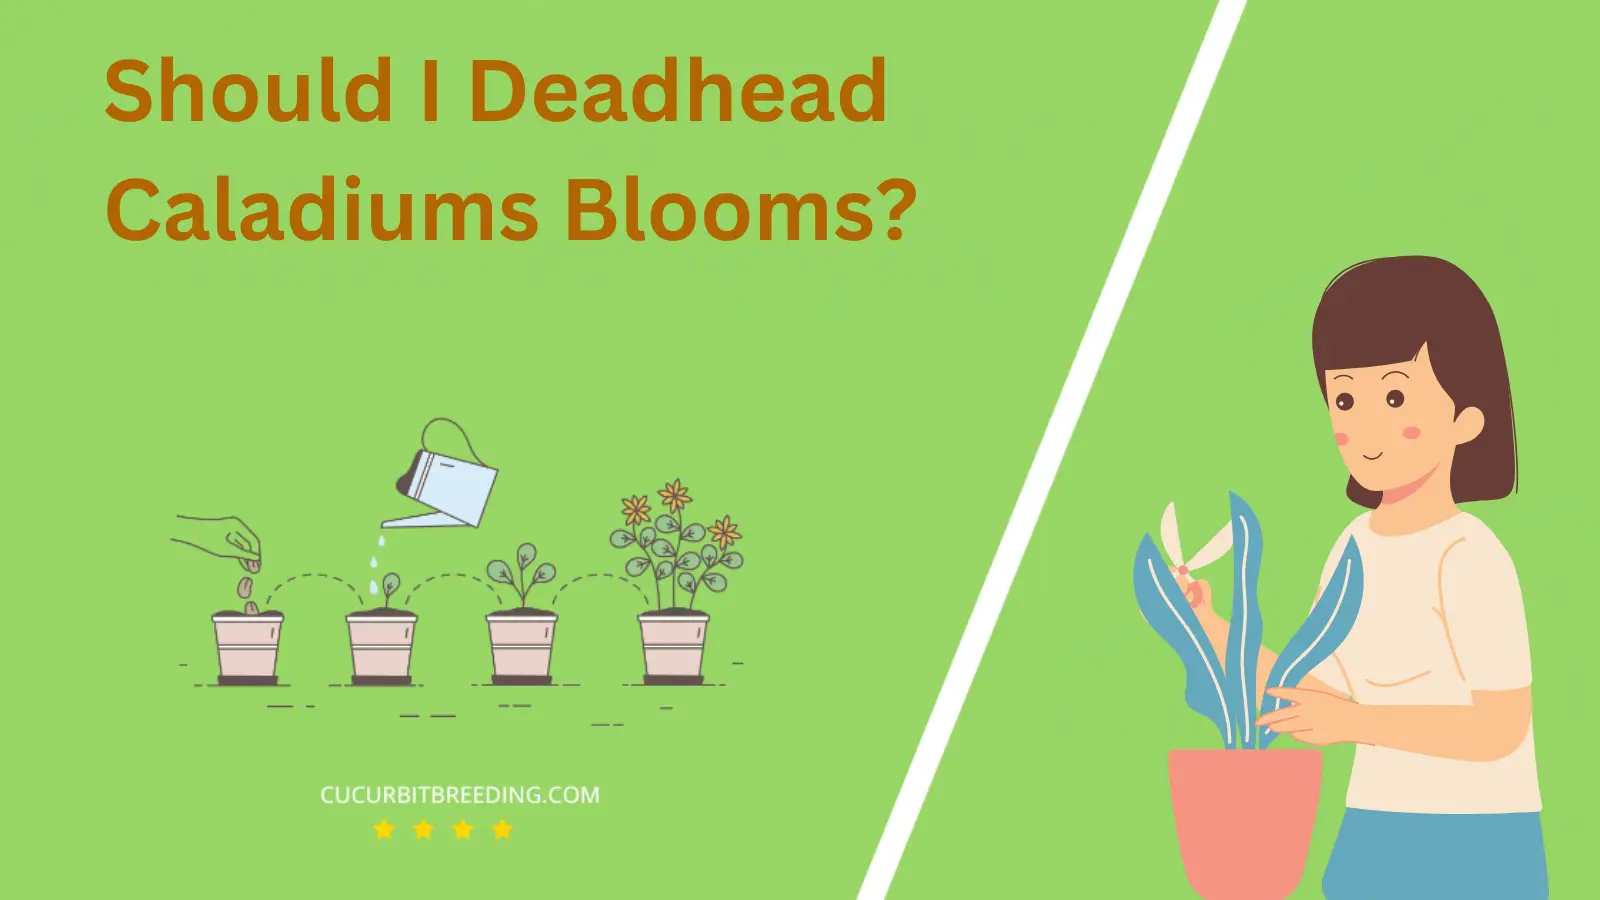 Should I Deadhead Caladiums Blooms?